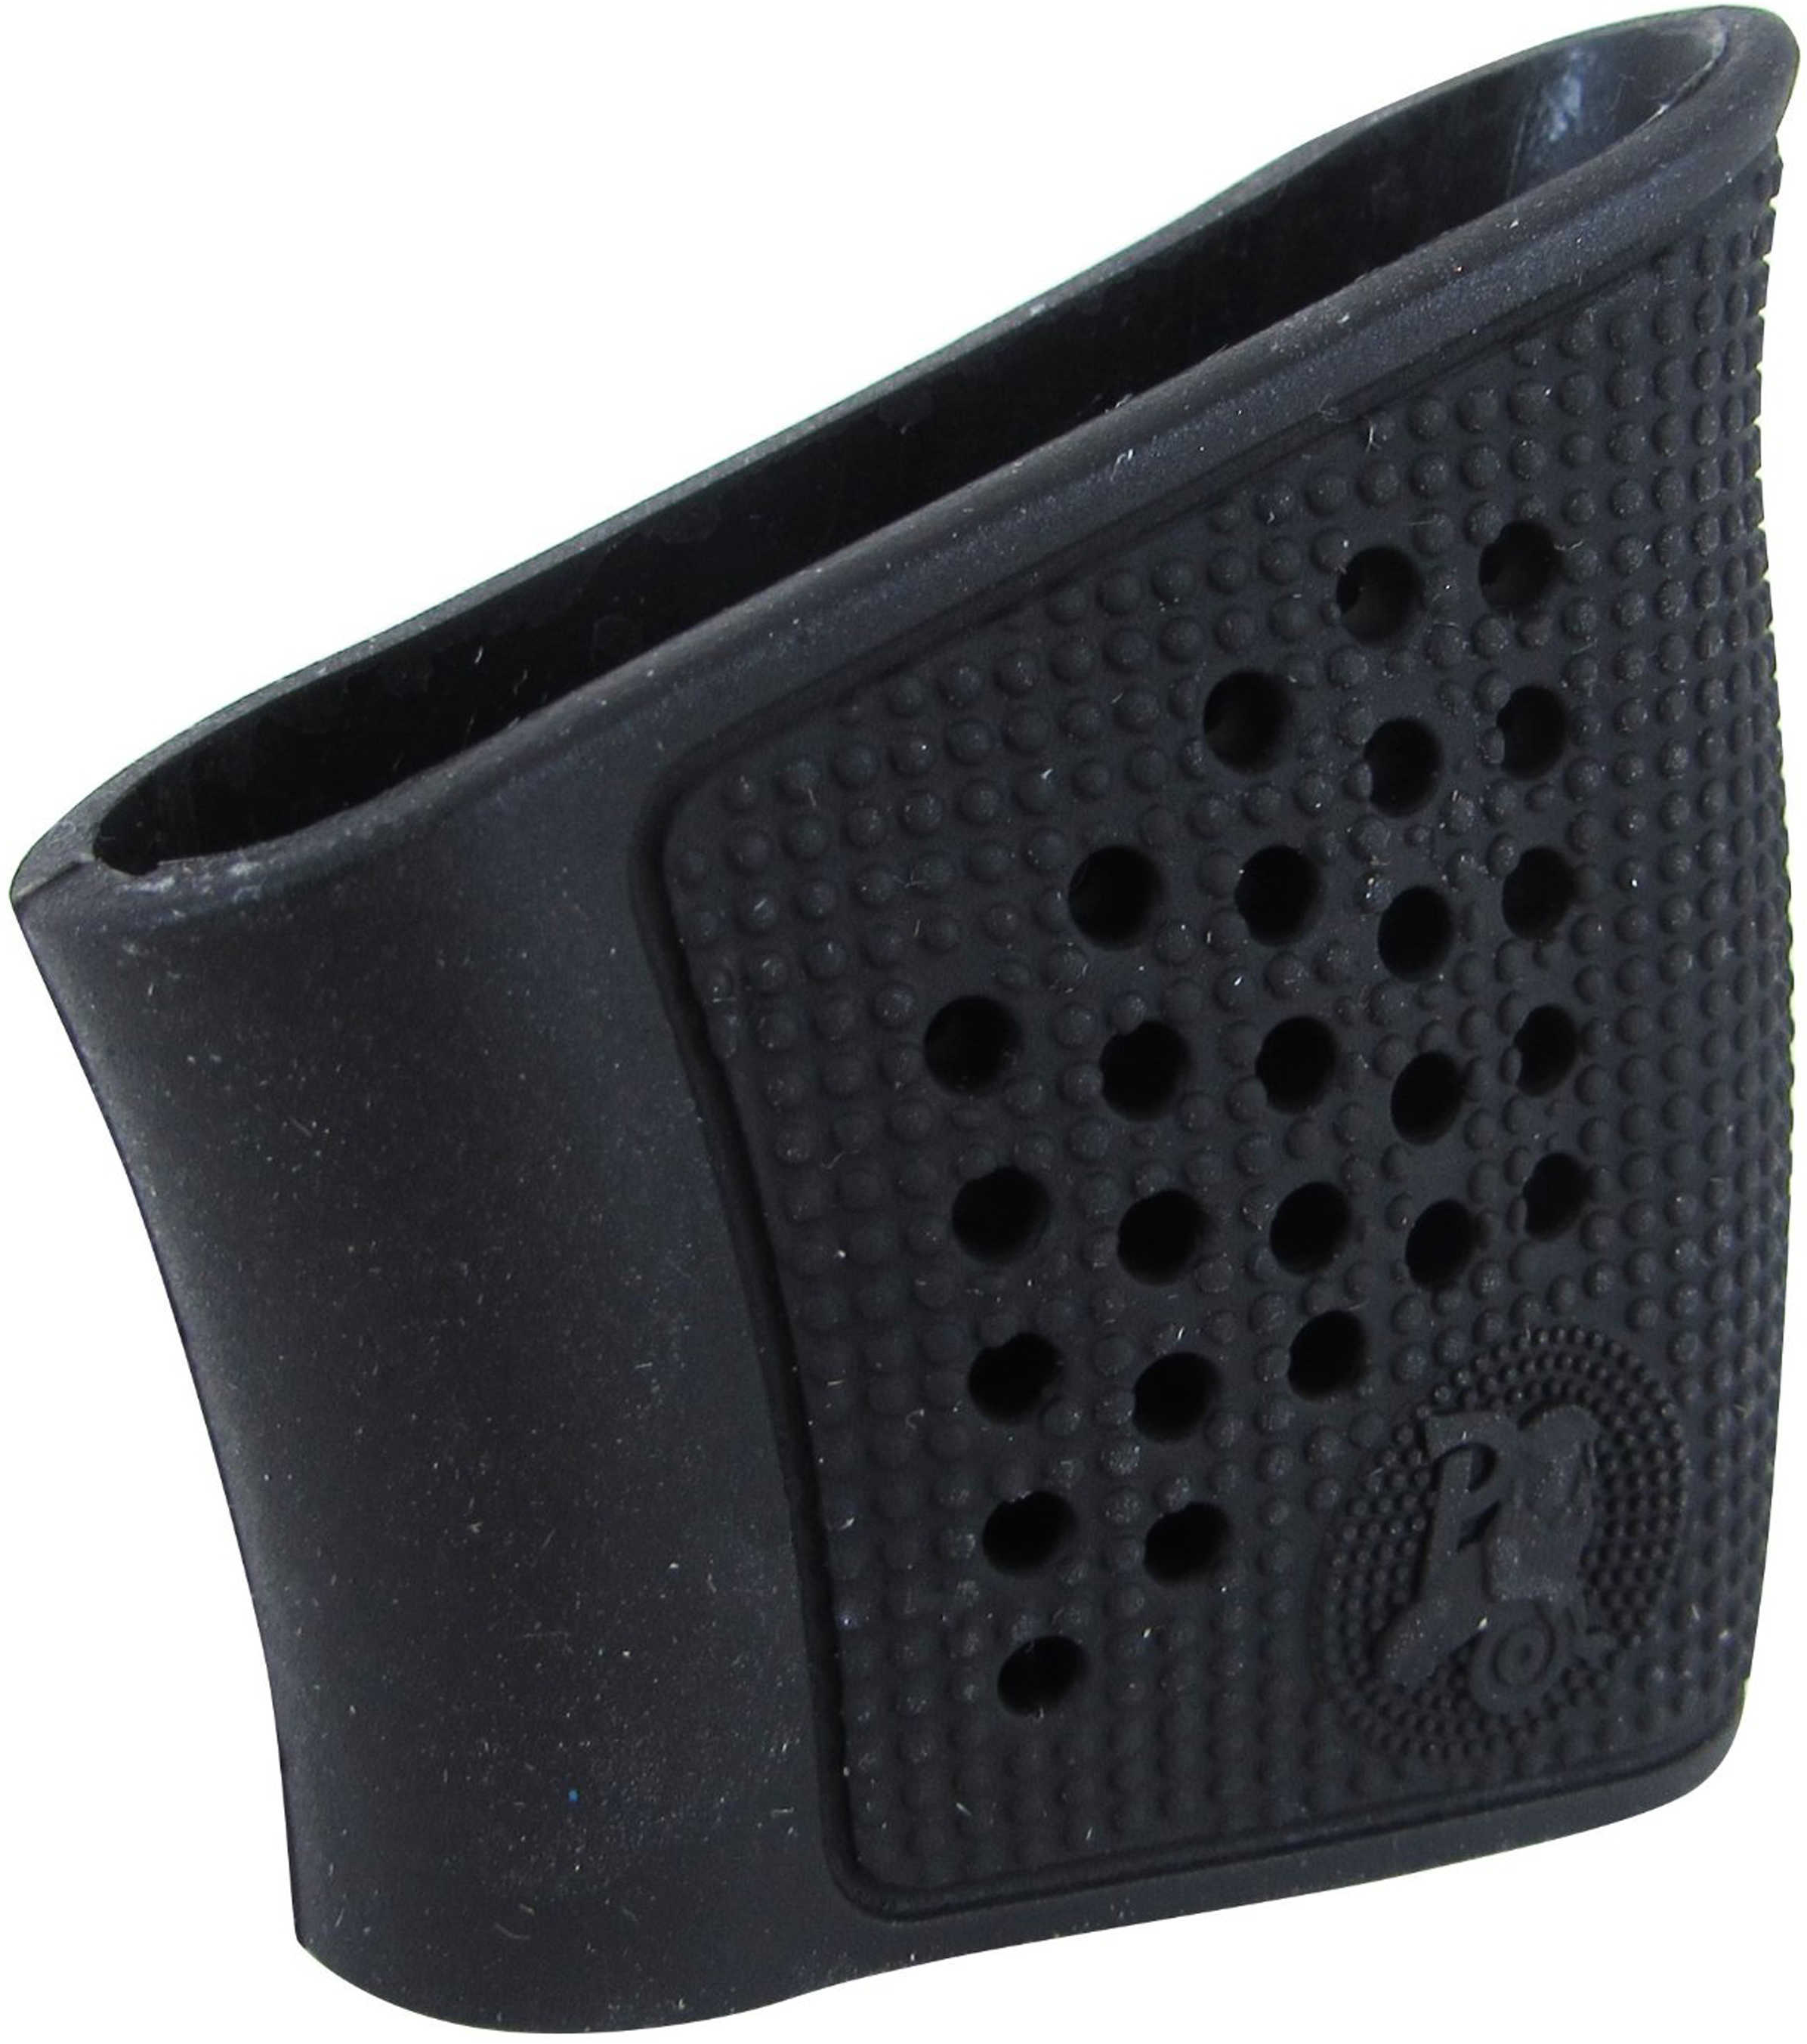 Pachmayr Grip Tactical Glove Black Slip-On Fits Glk 42 5161-img-1